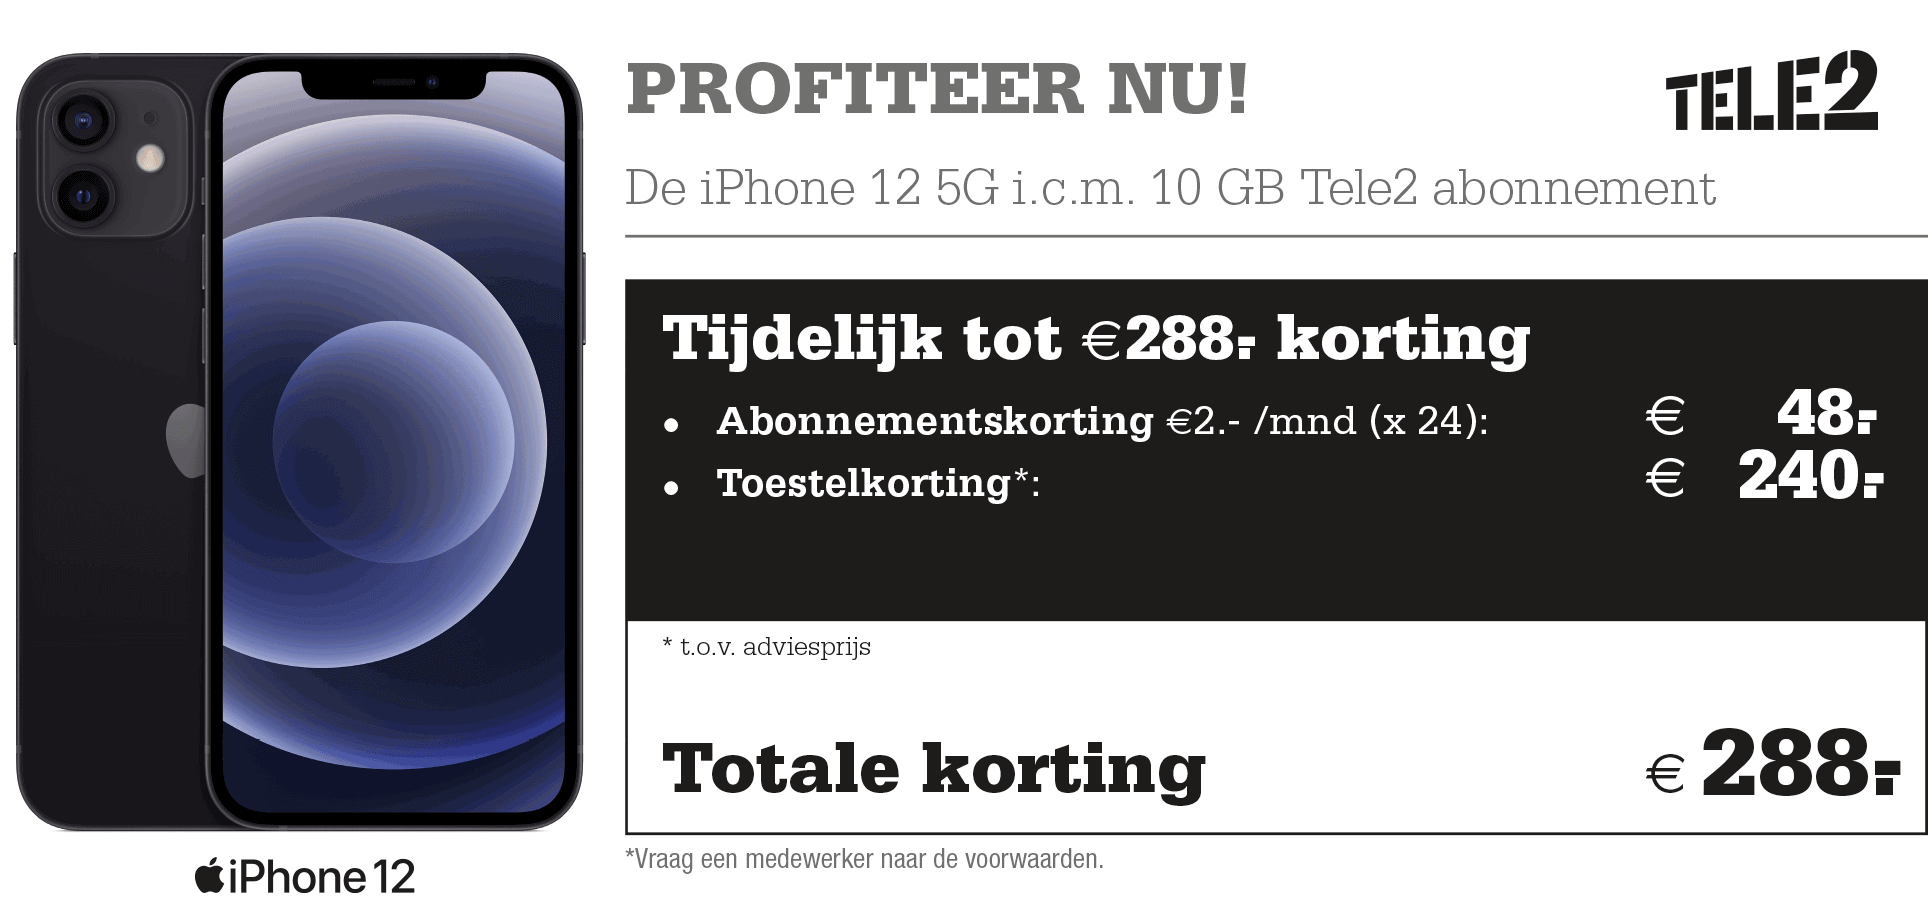 Tele2 Apple iPhone 12 €288,- korting